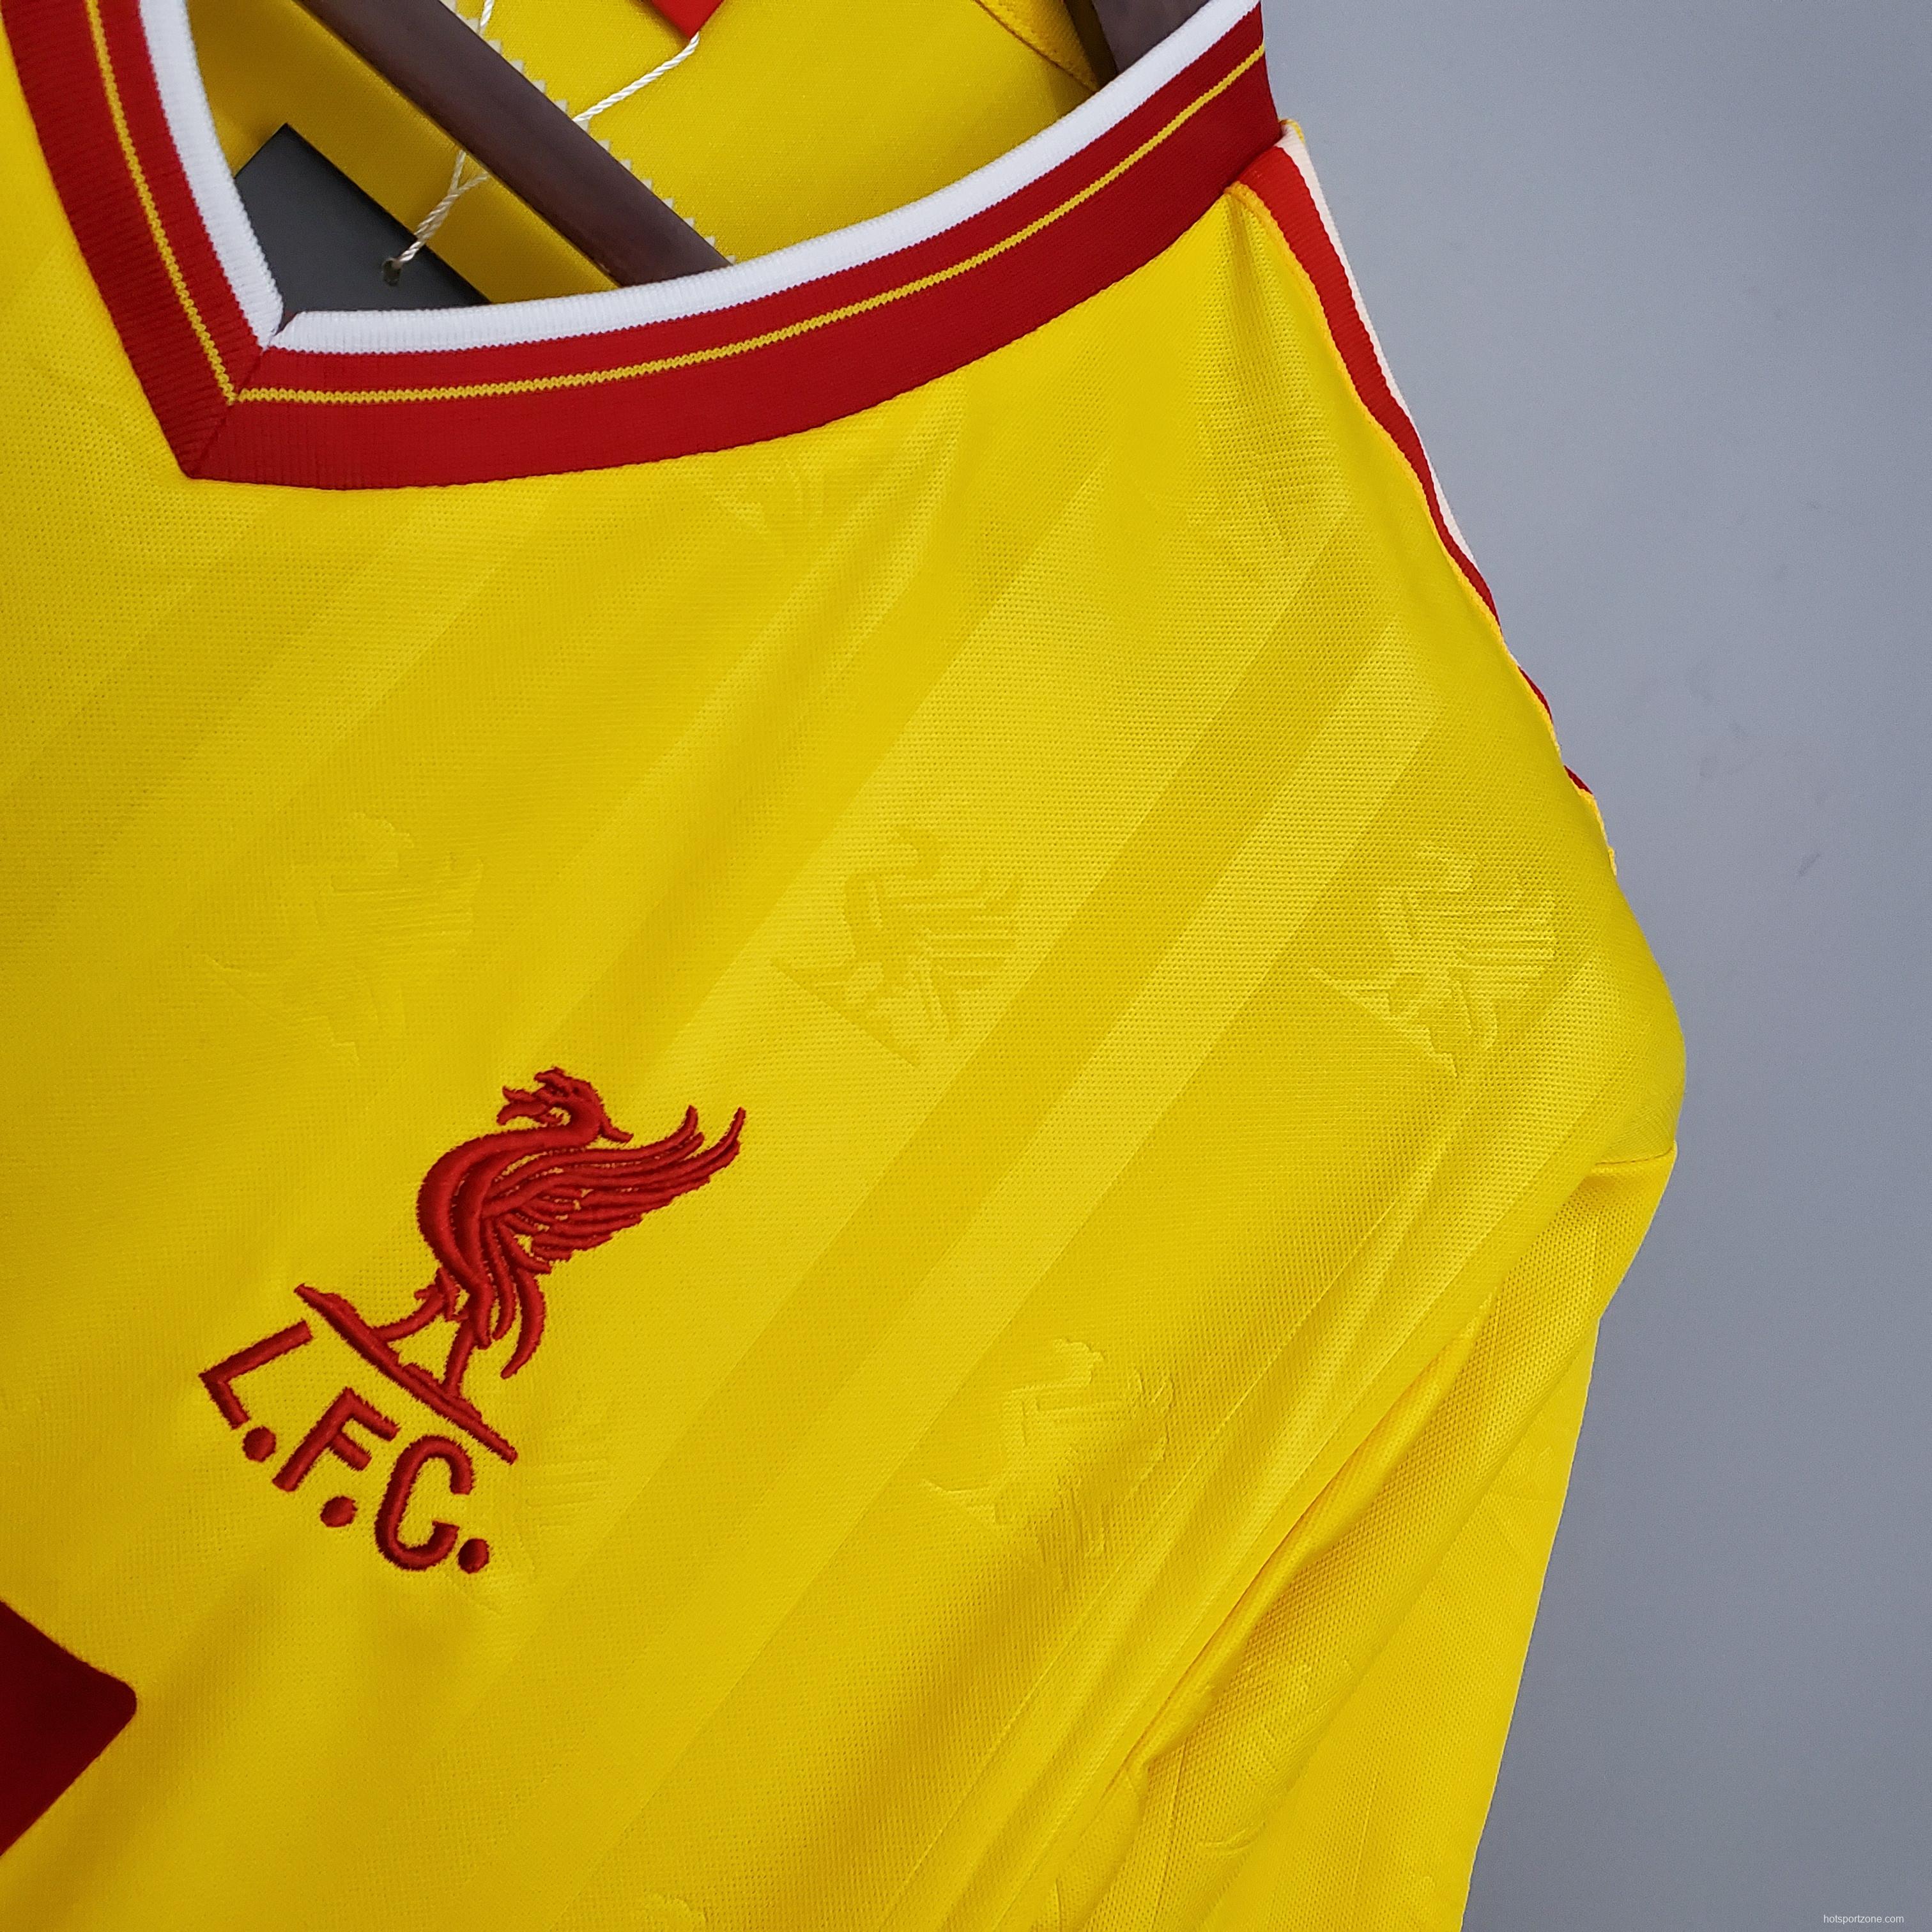 Retro 85/86 Liverpool away yellow Soccer Jersey